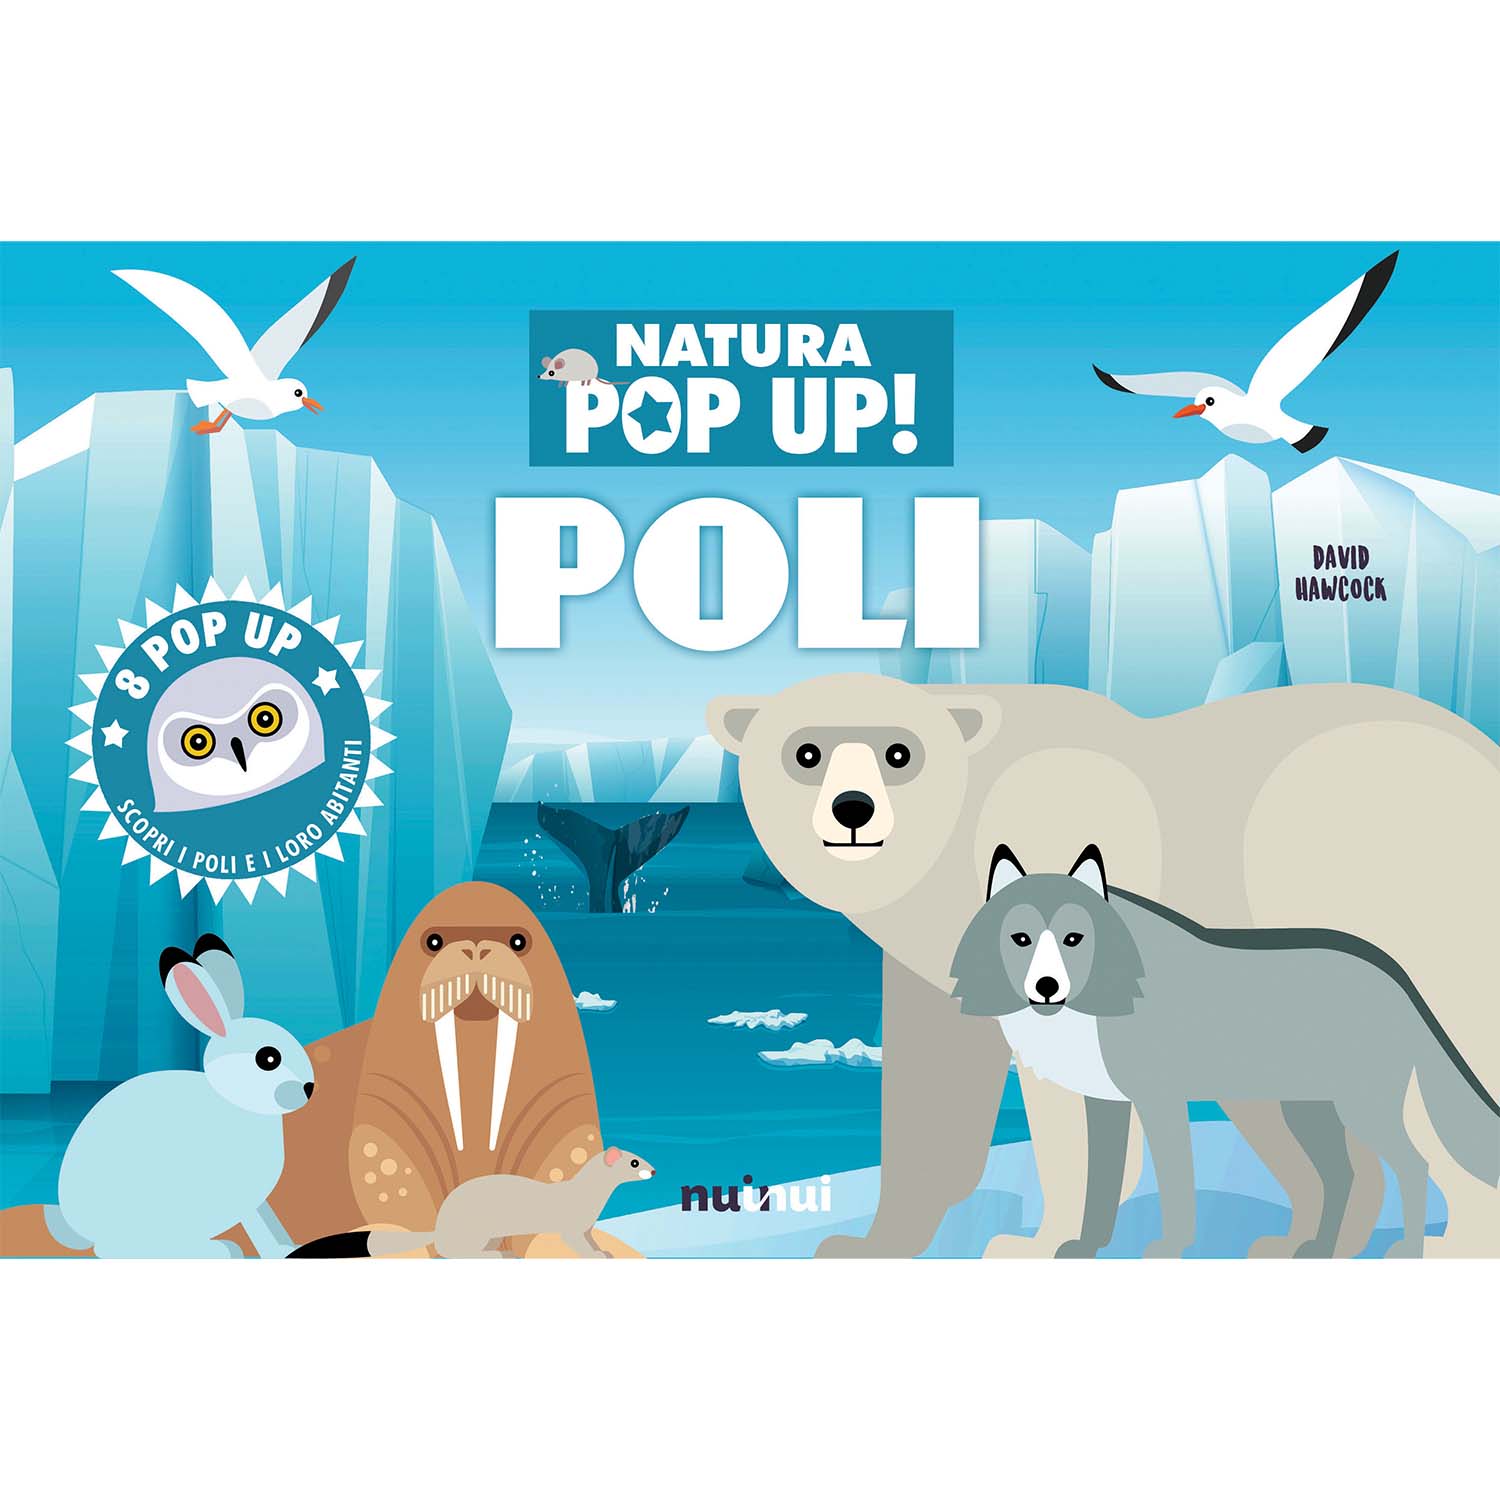 Natura pop up - Poli